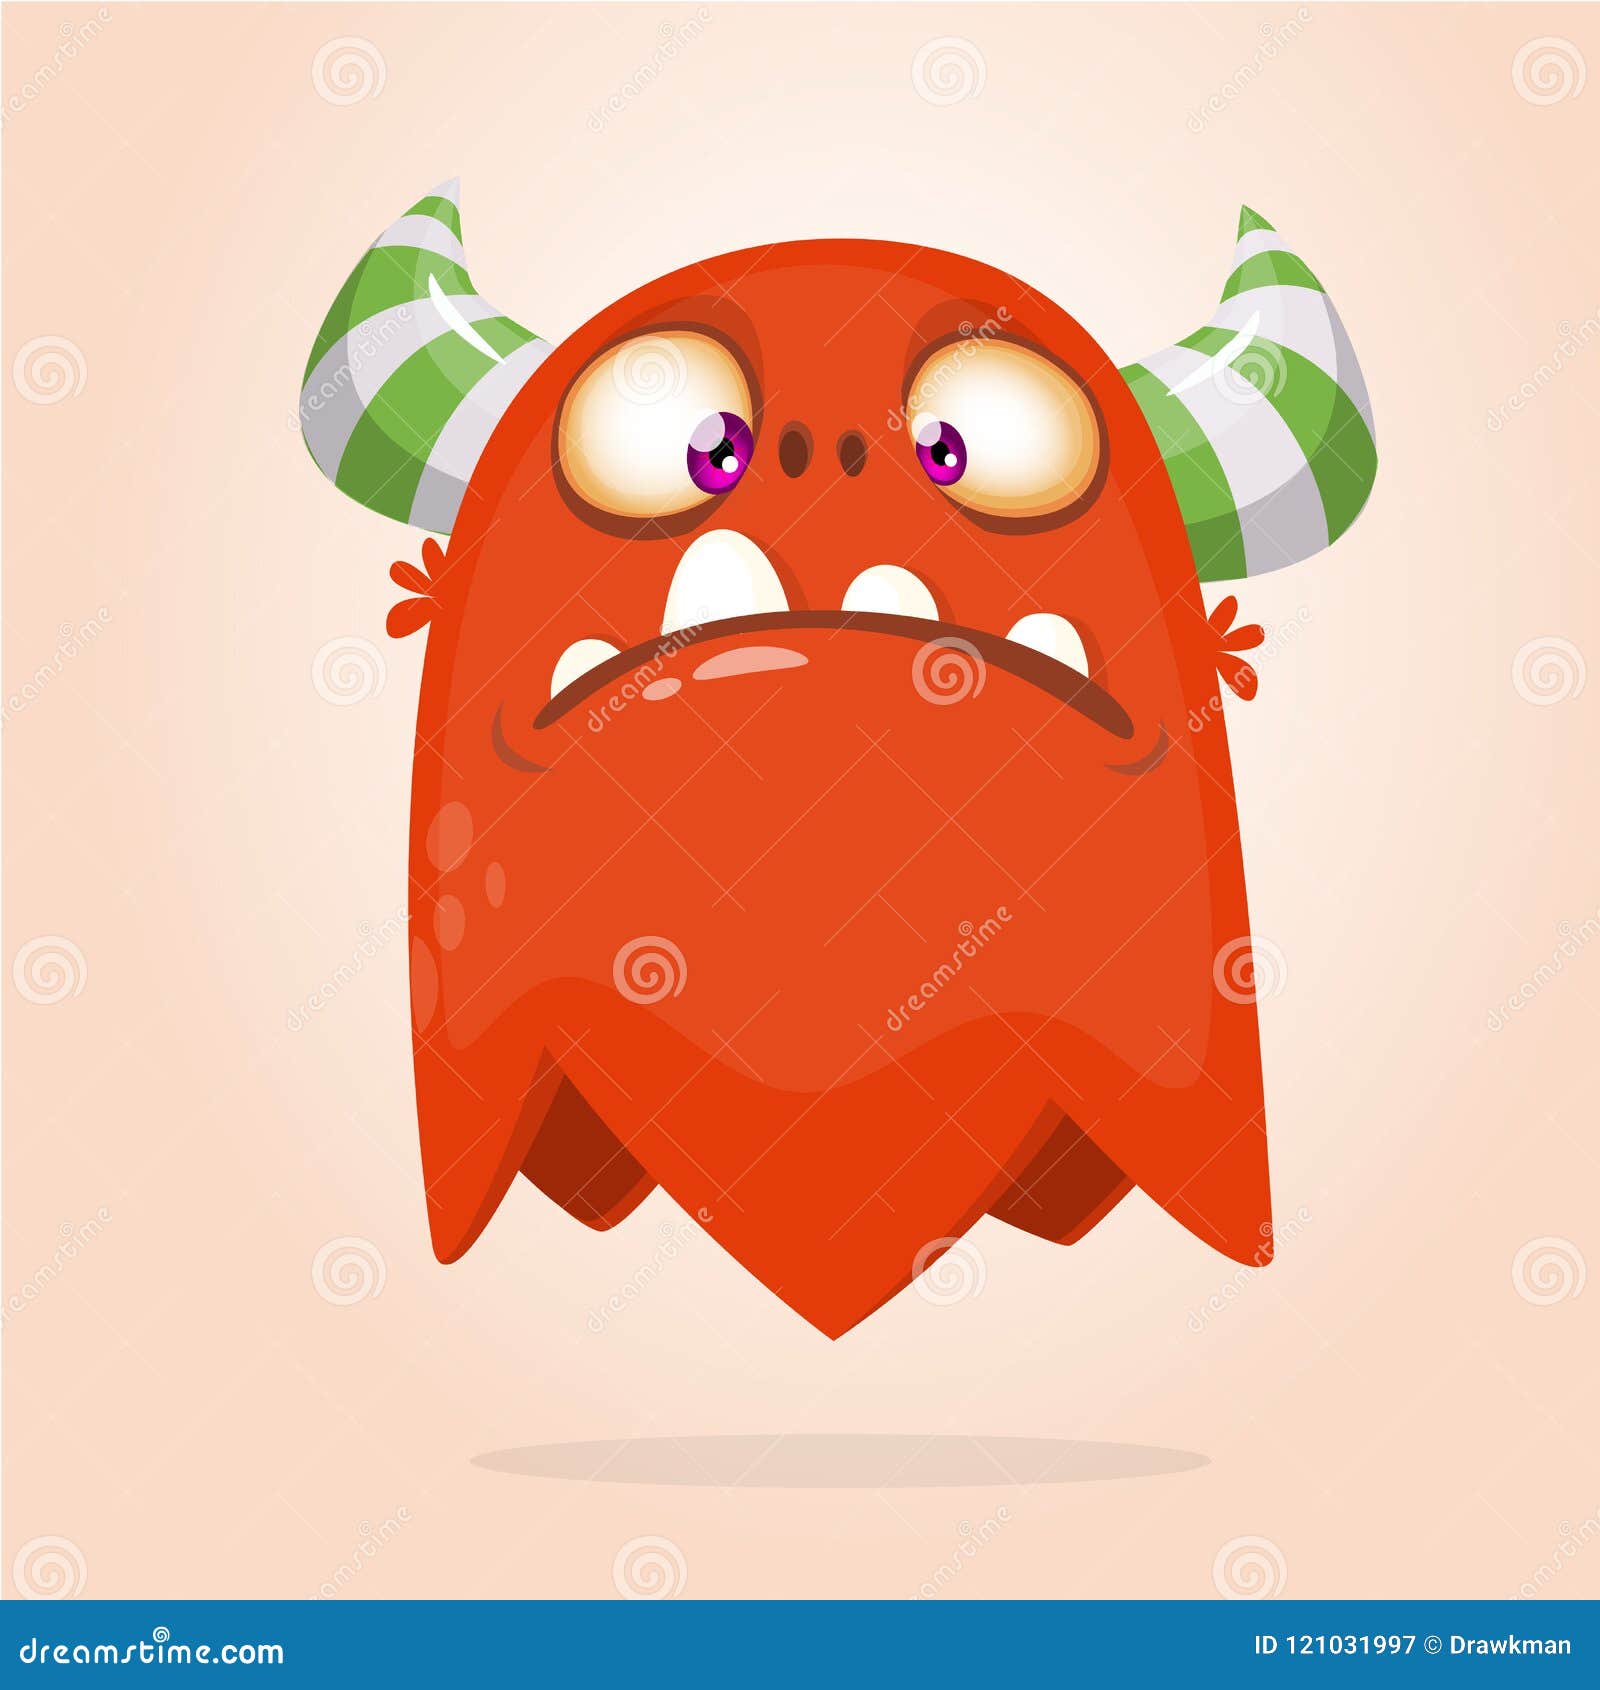 Grumpy Cartoon Monster. Vector Halloween Illustration of Funny